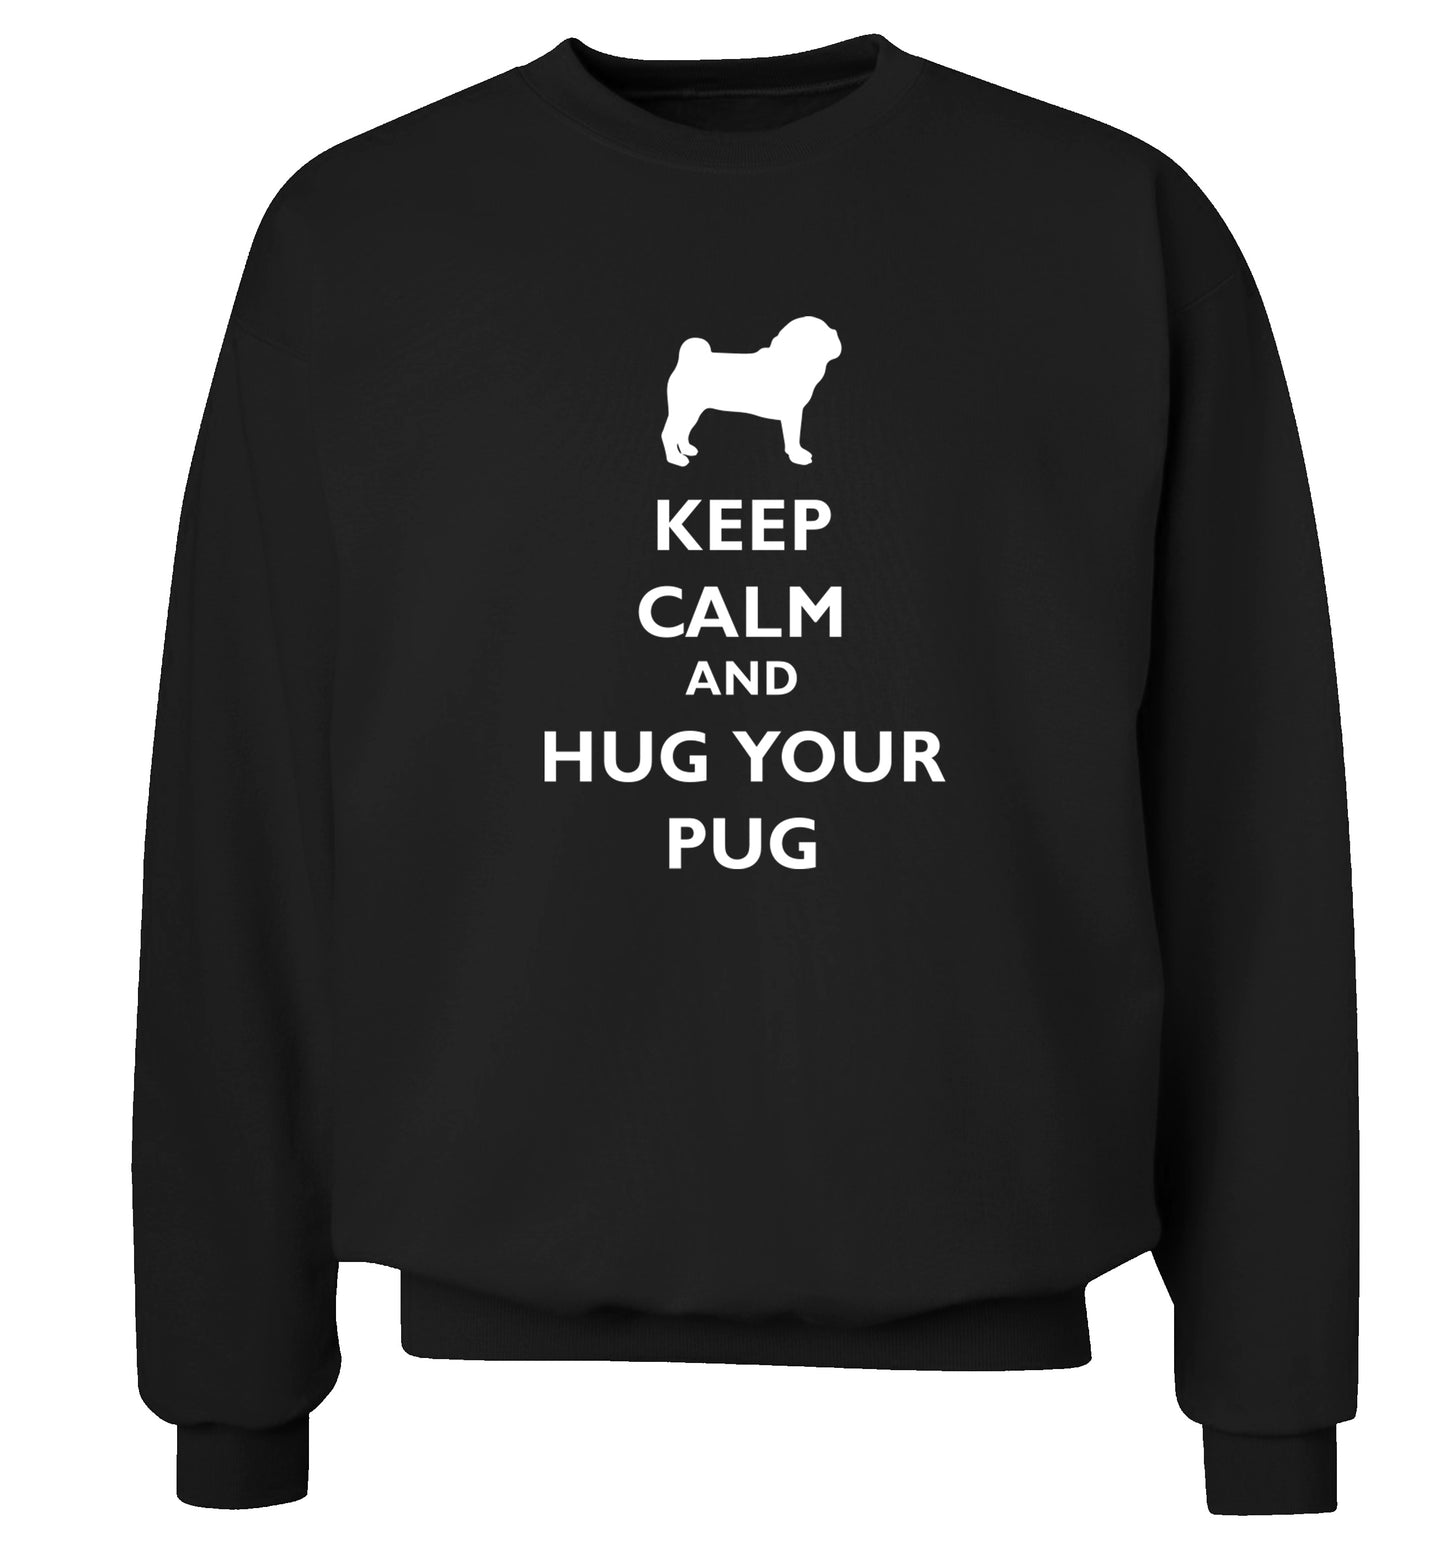 Keep calm and hug your pug Adult's unisex black Sweater 2XL